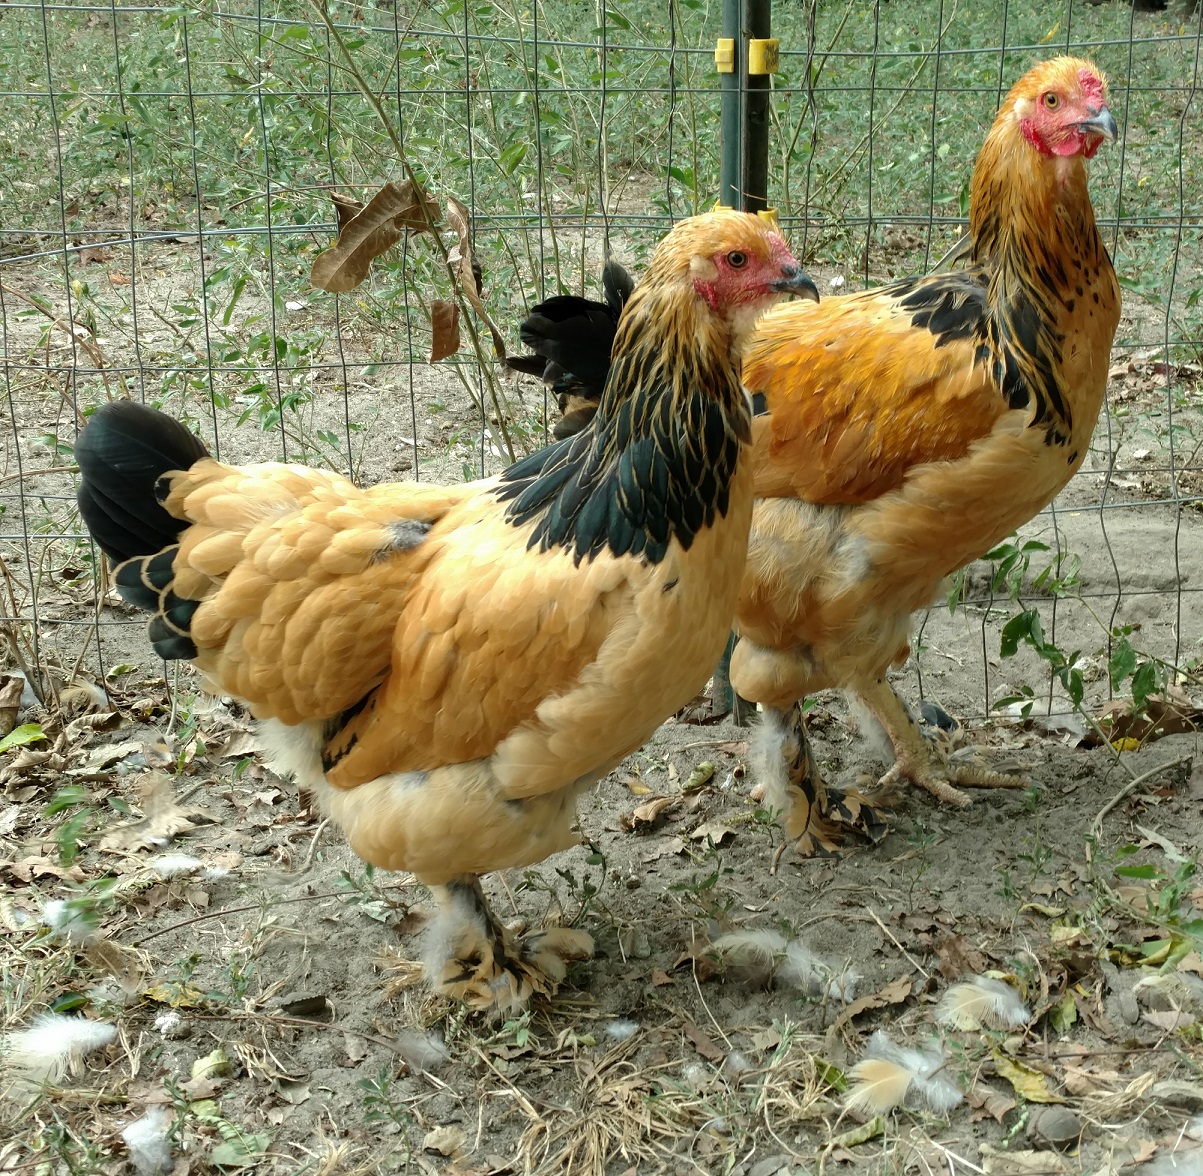 How Big Do Buff Brahma Chickens Get? From Tiny Chicks To Majestic Brahmas